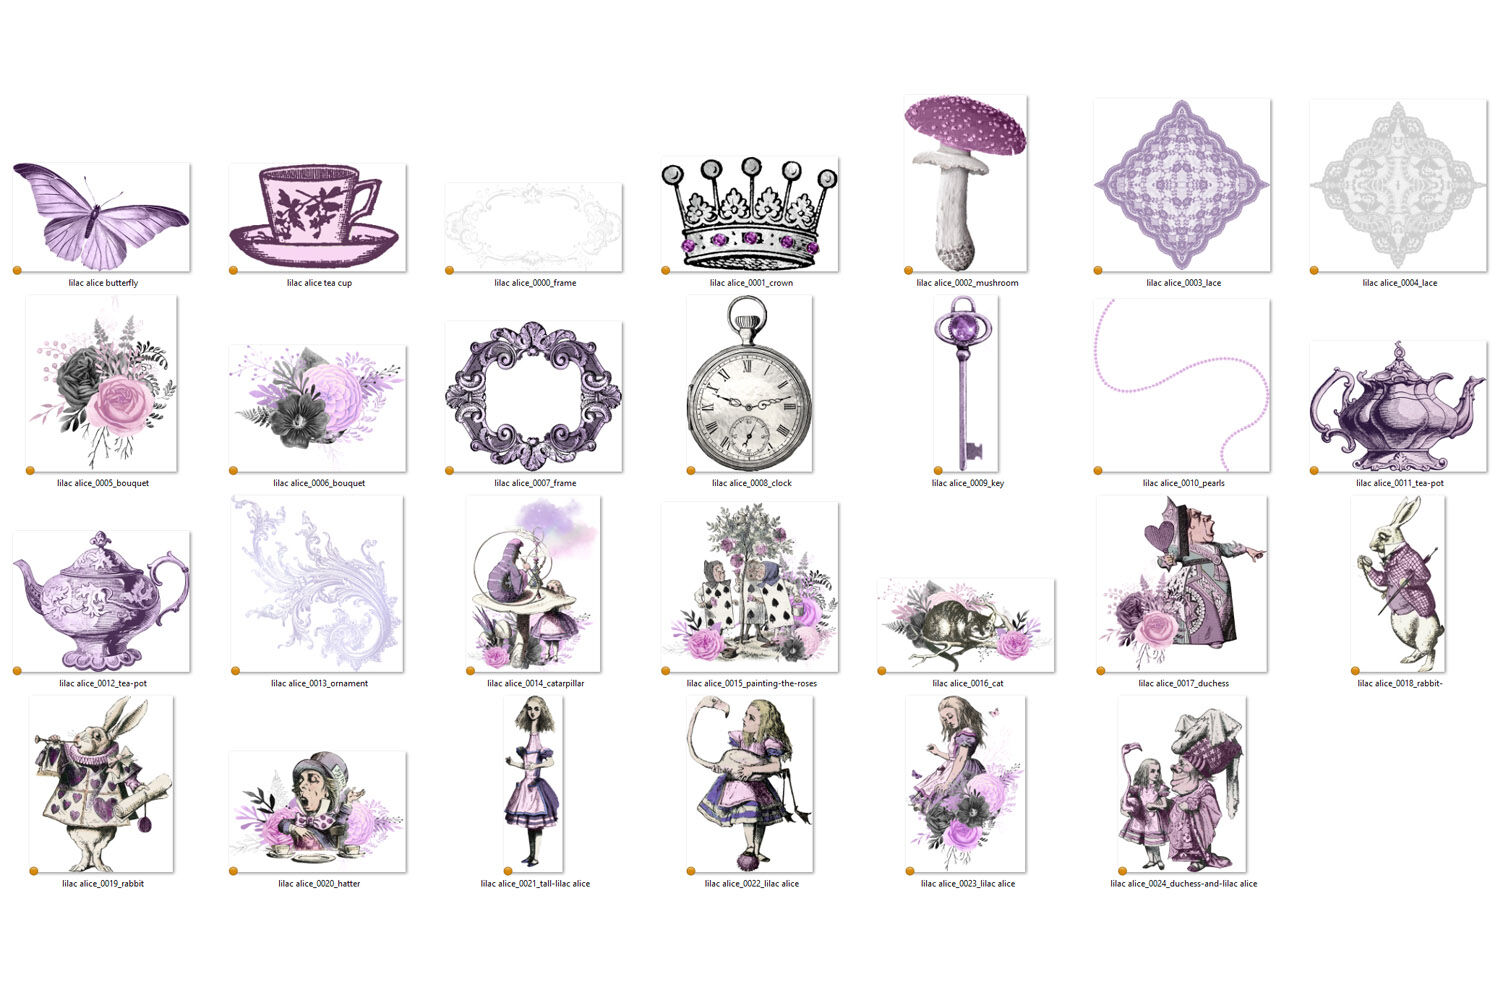 Lilac Alice In Wonderland Clipart By Digital Curio Thehungryjpeg Com